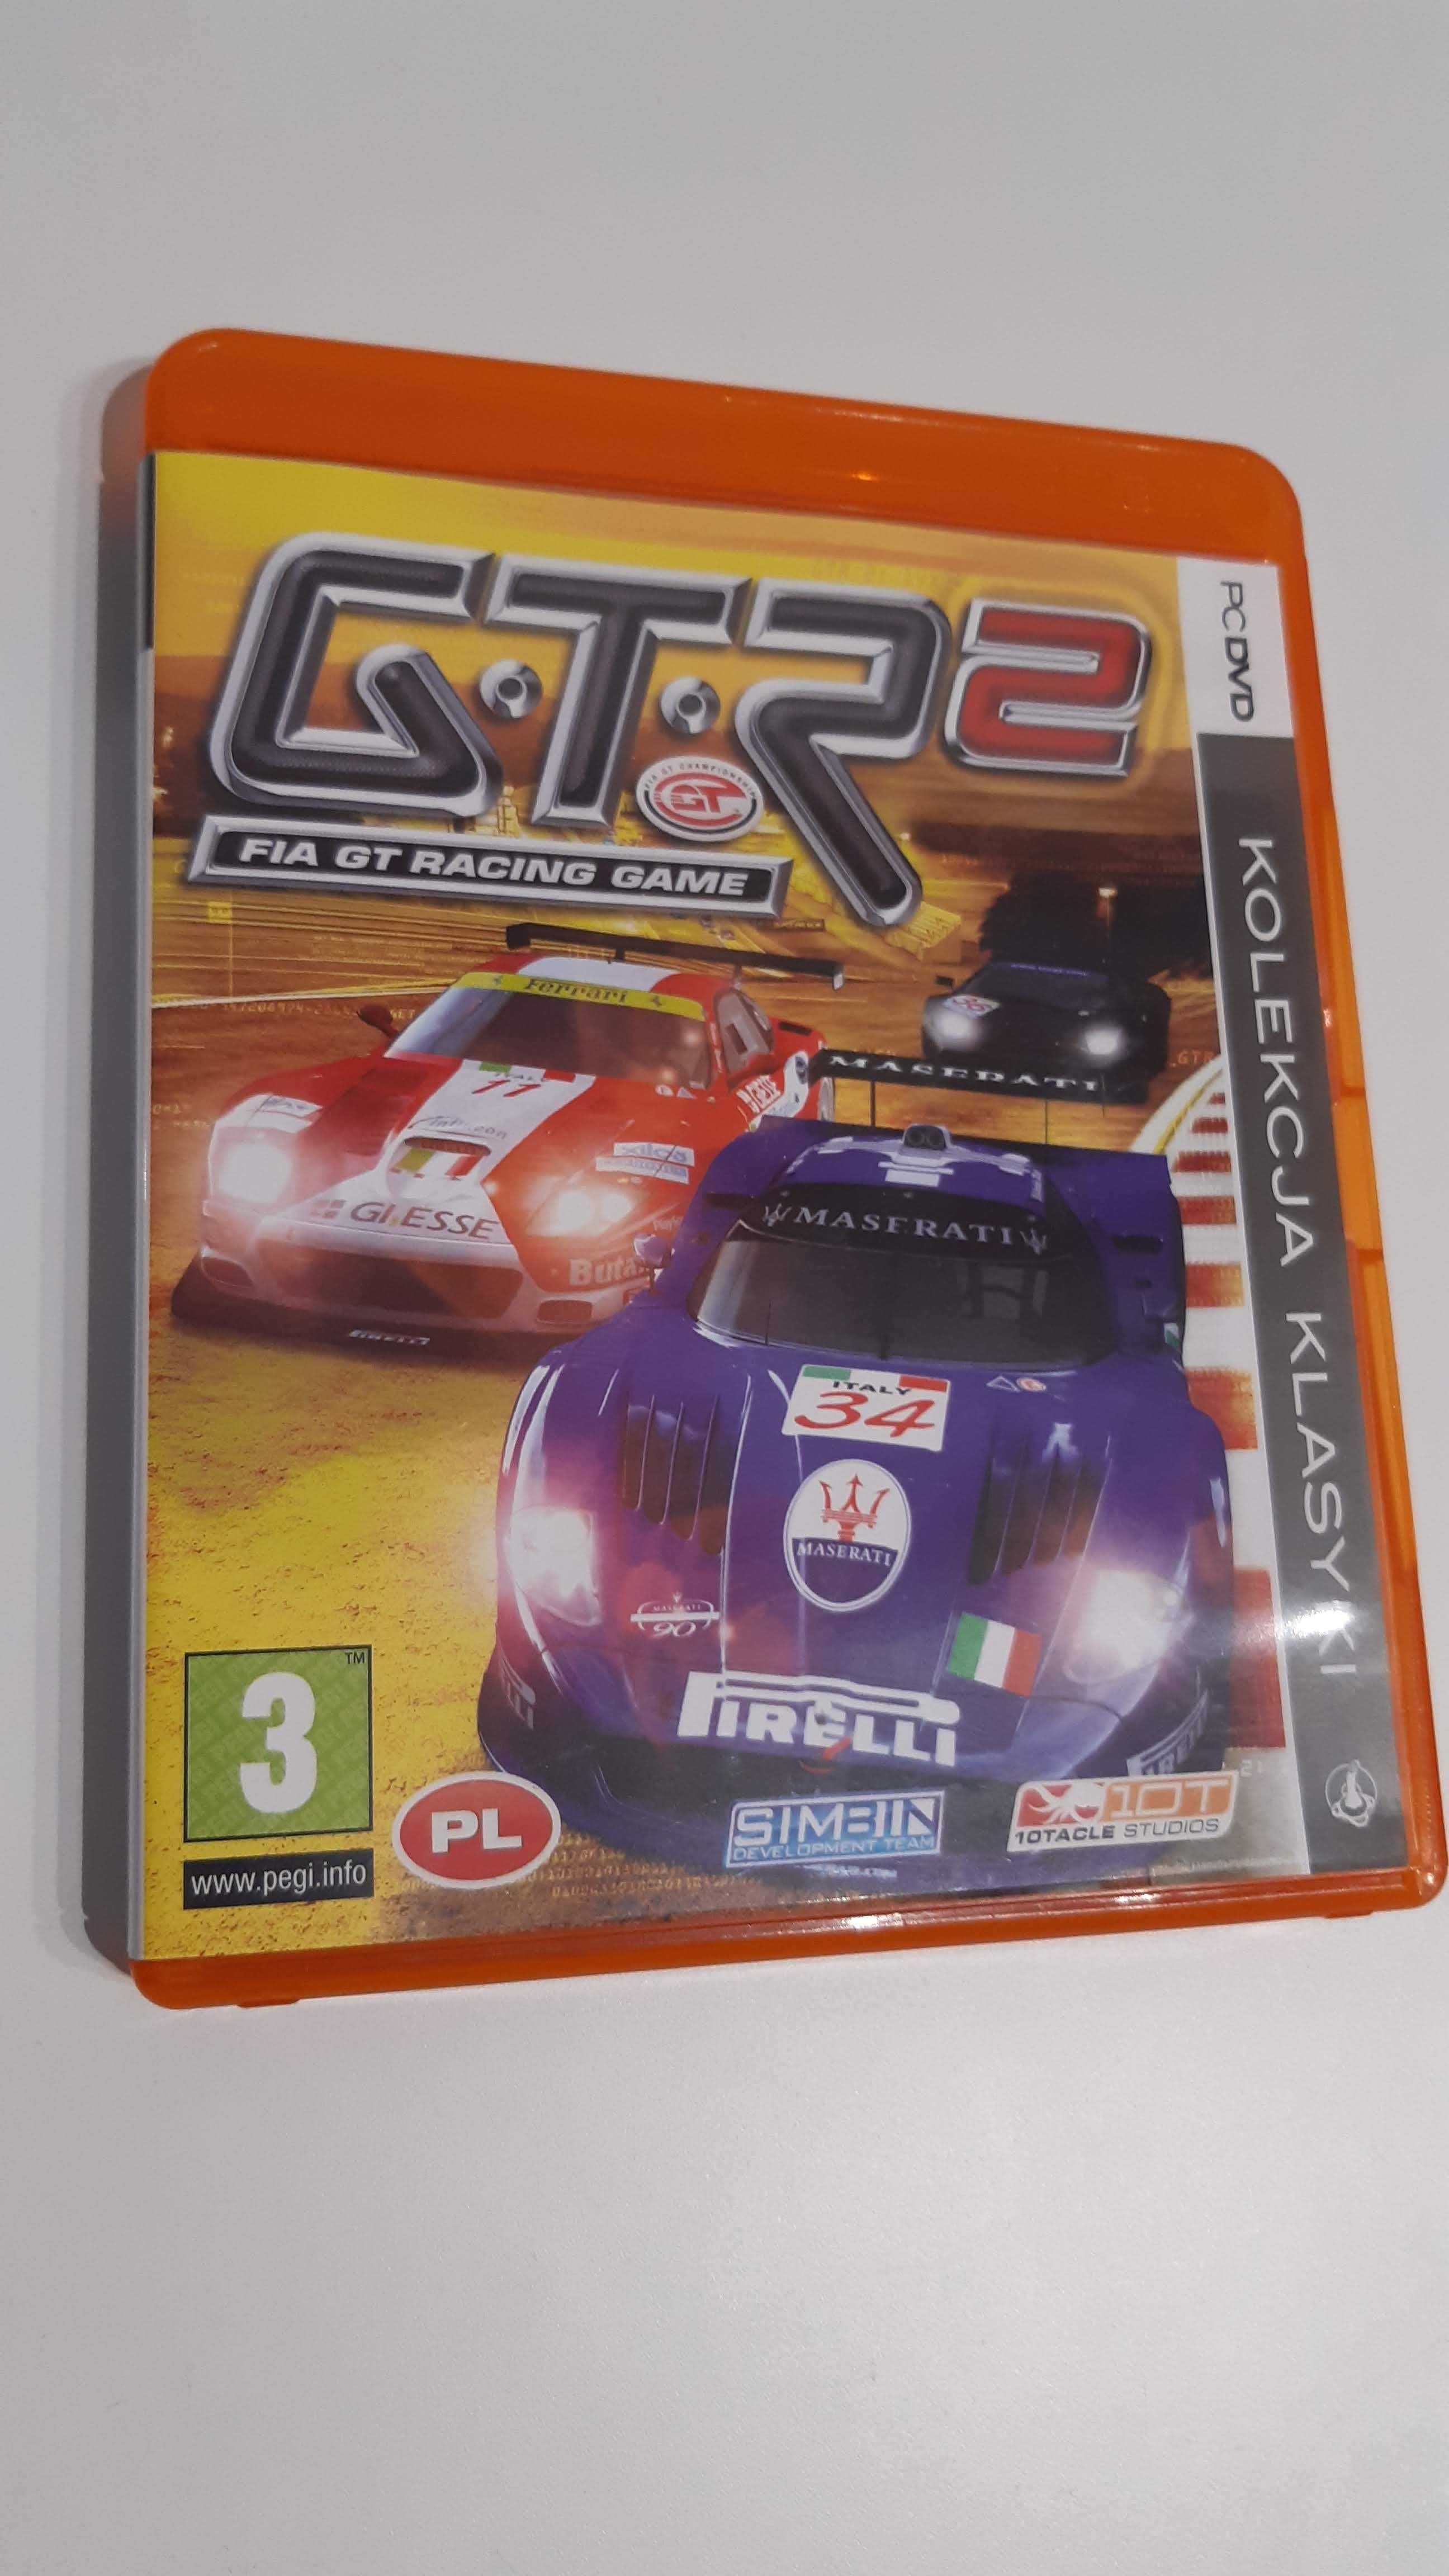 PC Gtr 2 Fia GT Racing game